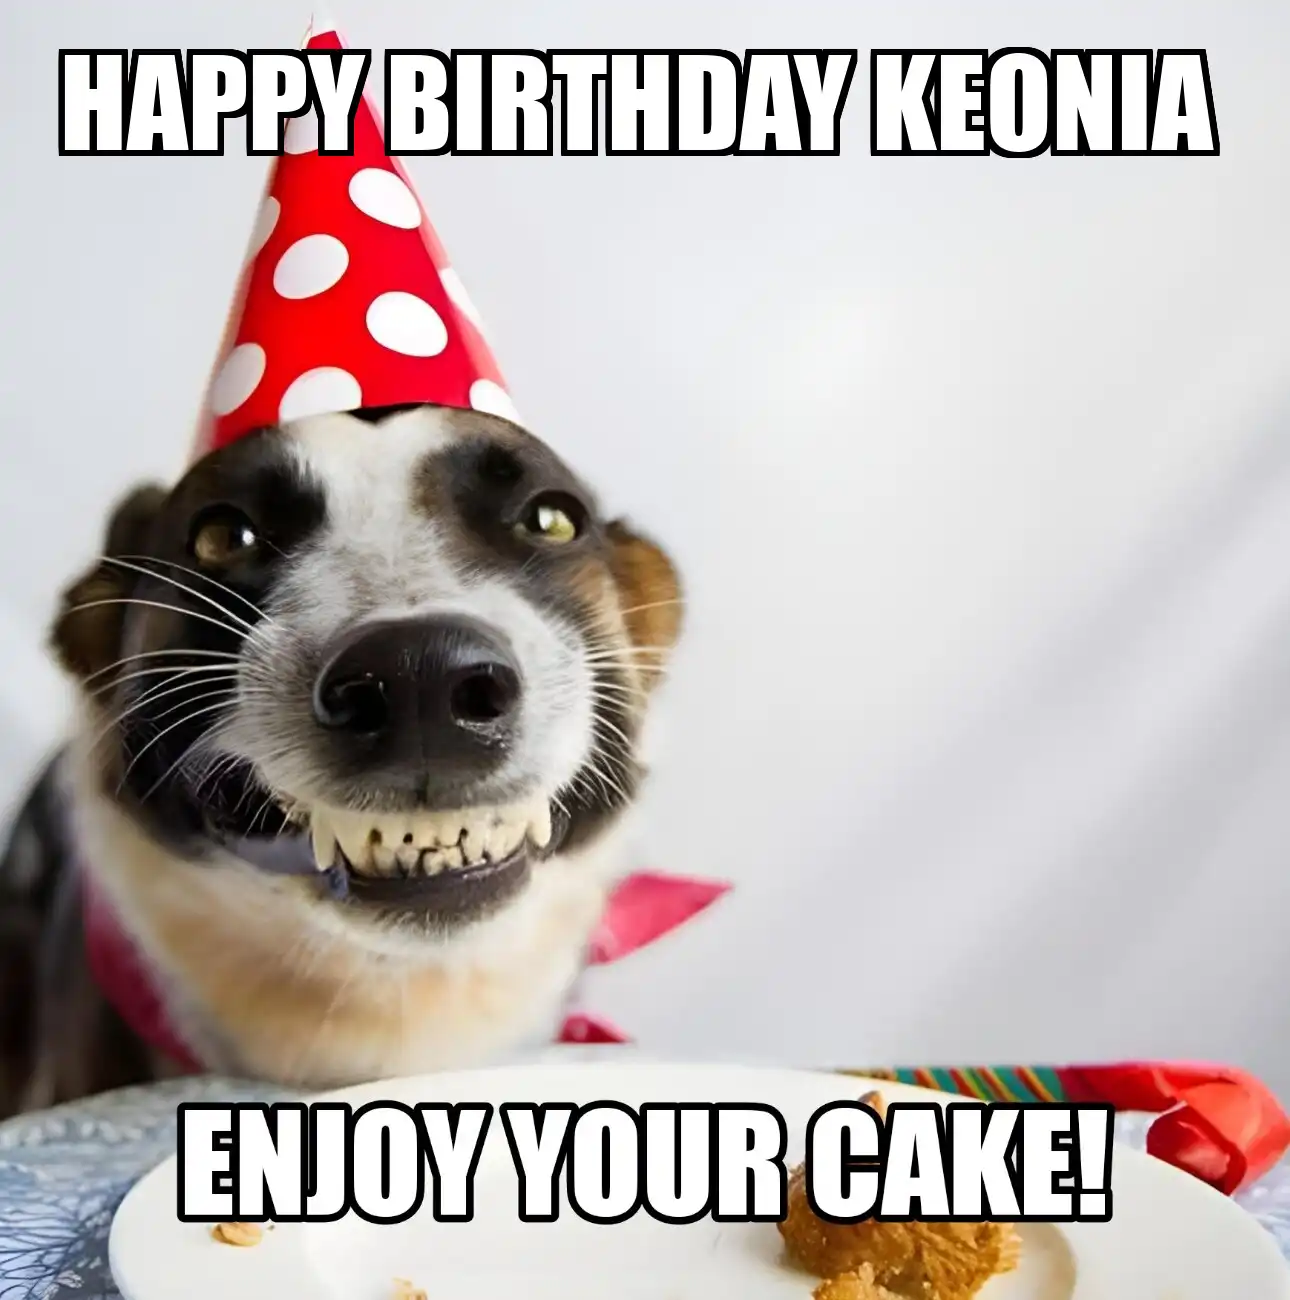 Happy Birthday Keonia Enjoy Your Cake Dog Meme